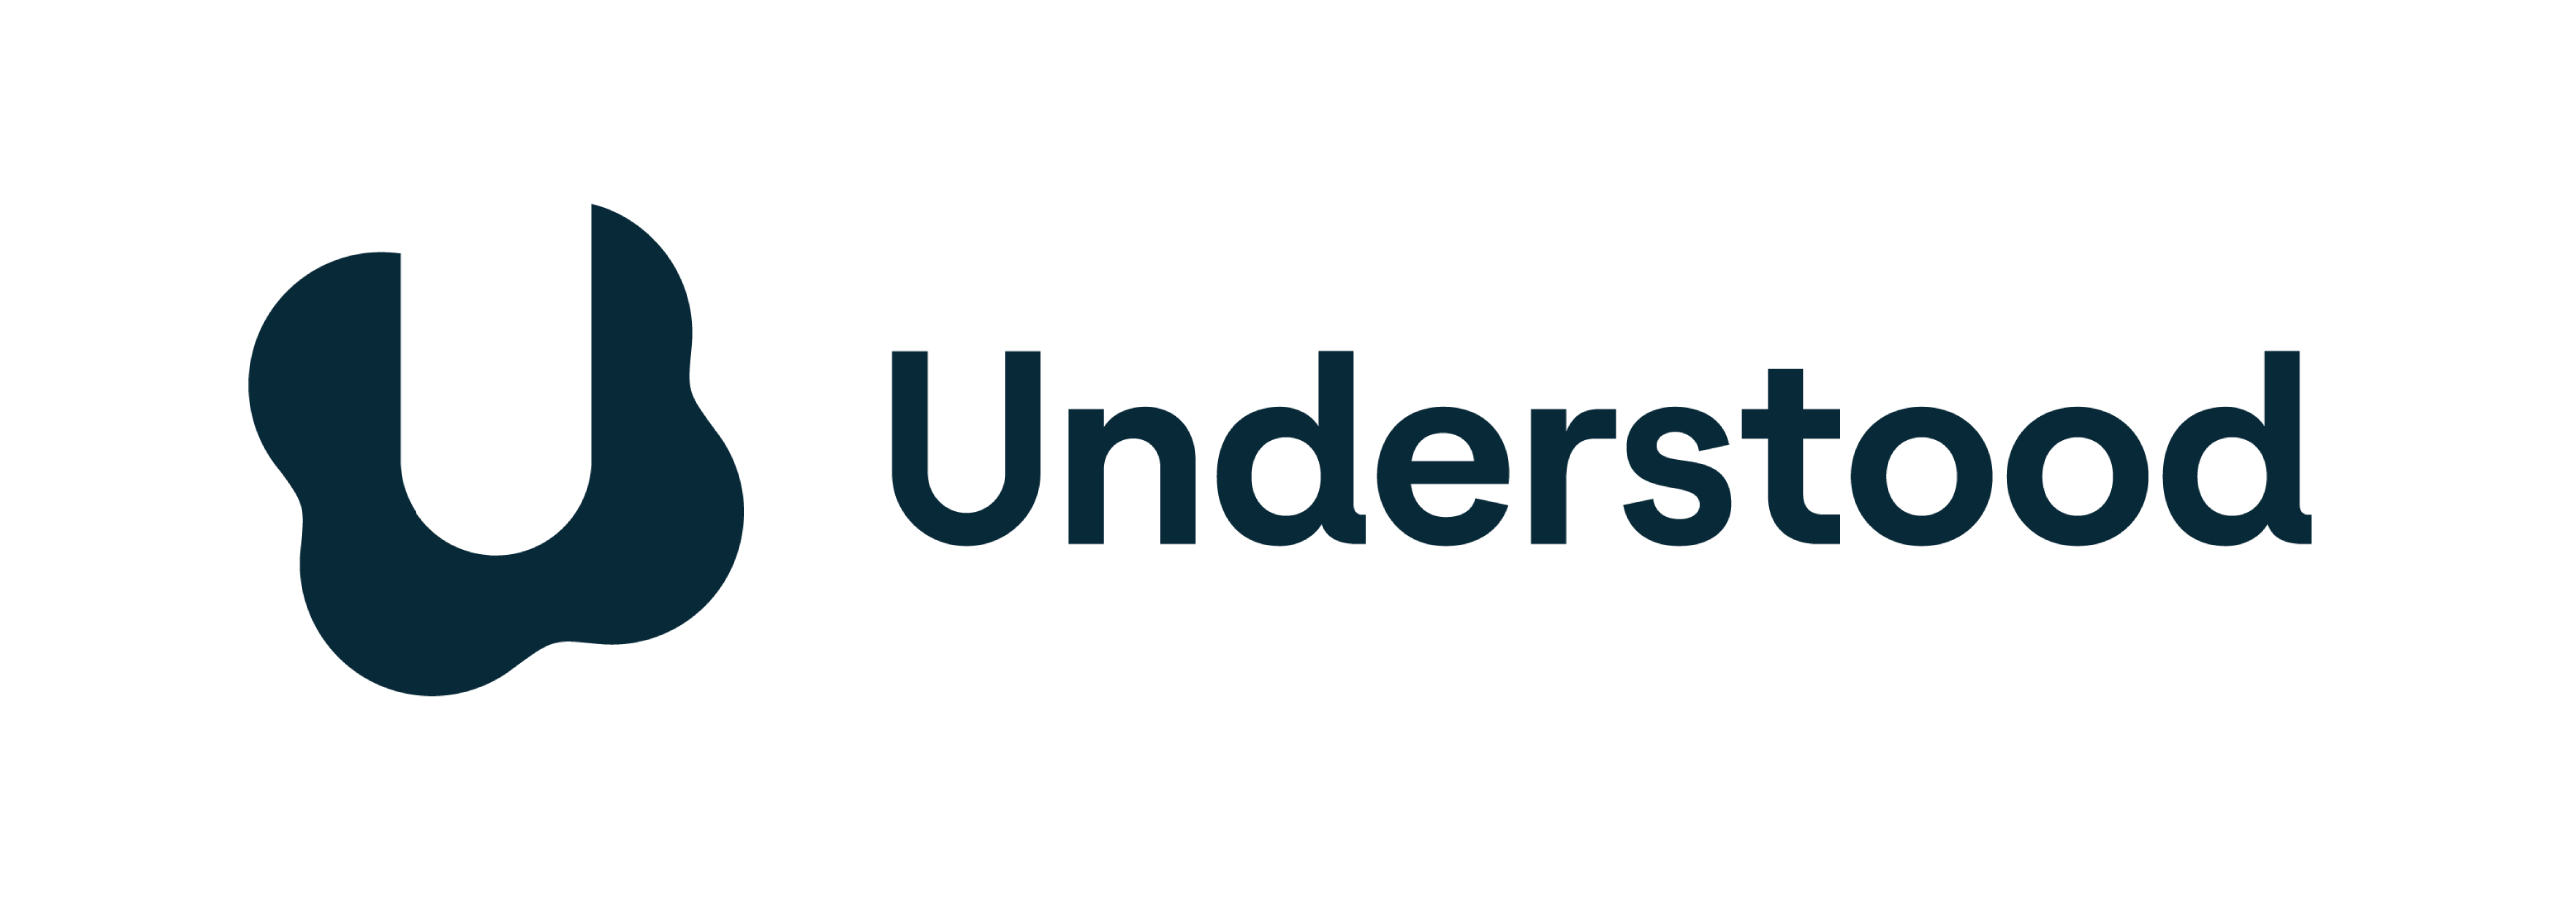 Understood.org logo